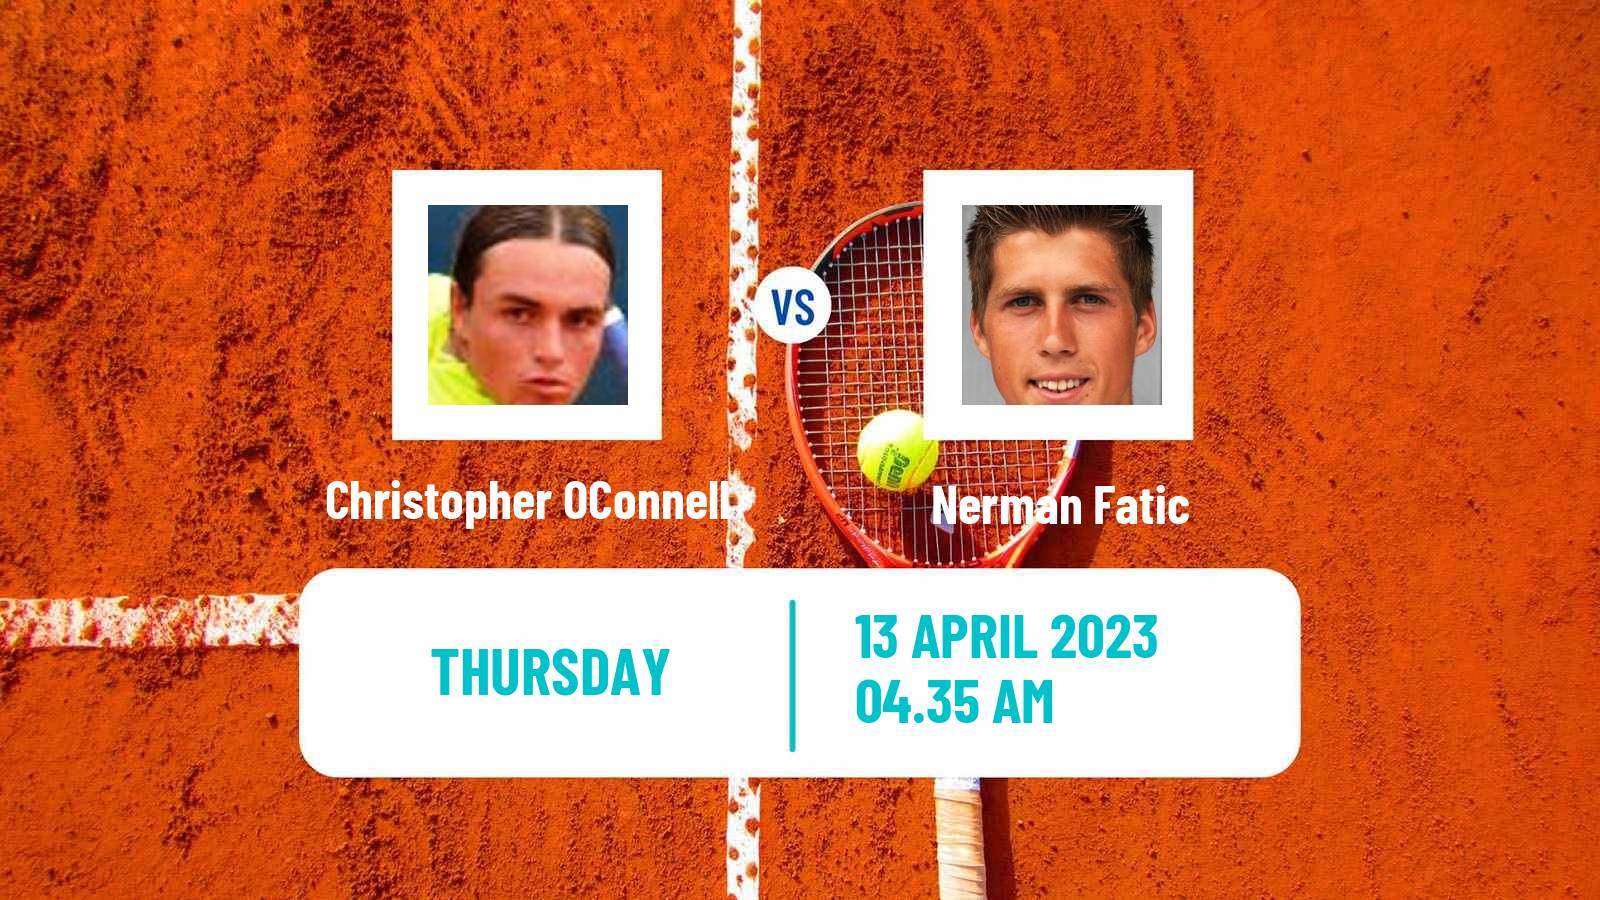 Tennis ATP Challenger Christopher OConnell - Nerman Fatic